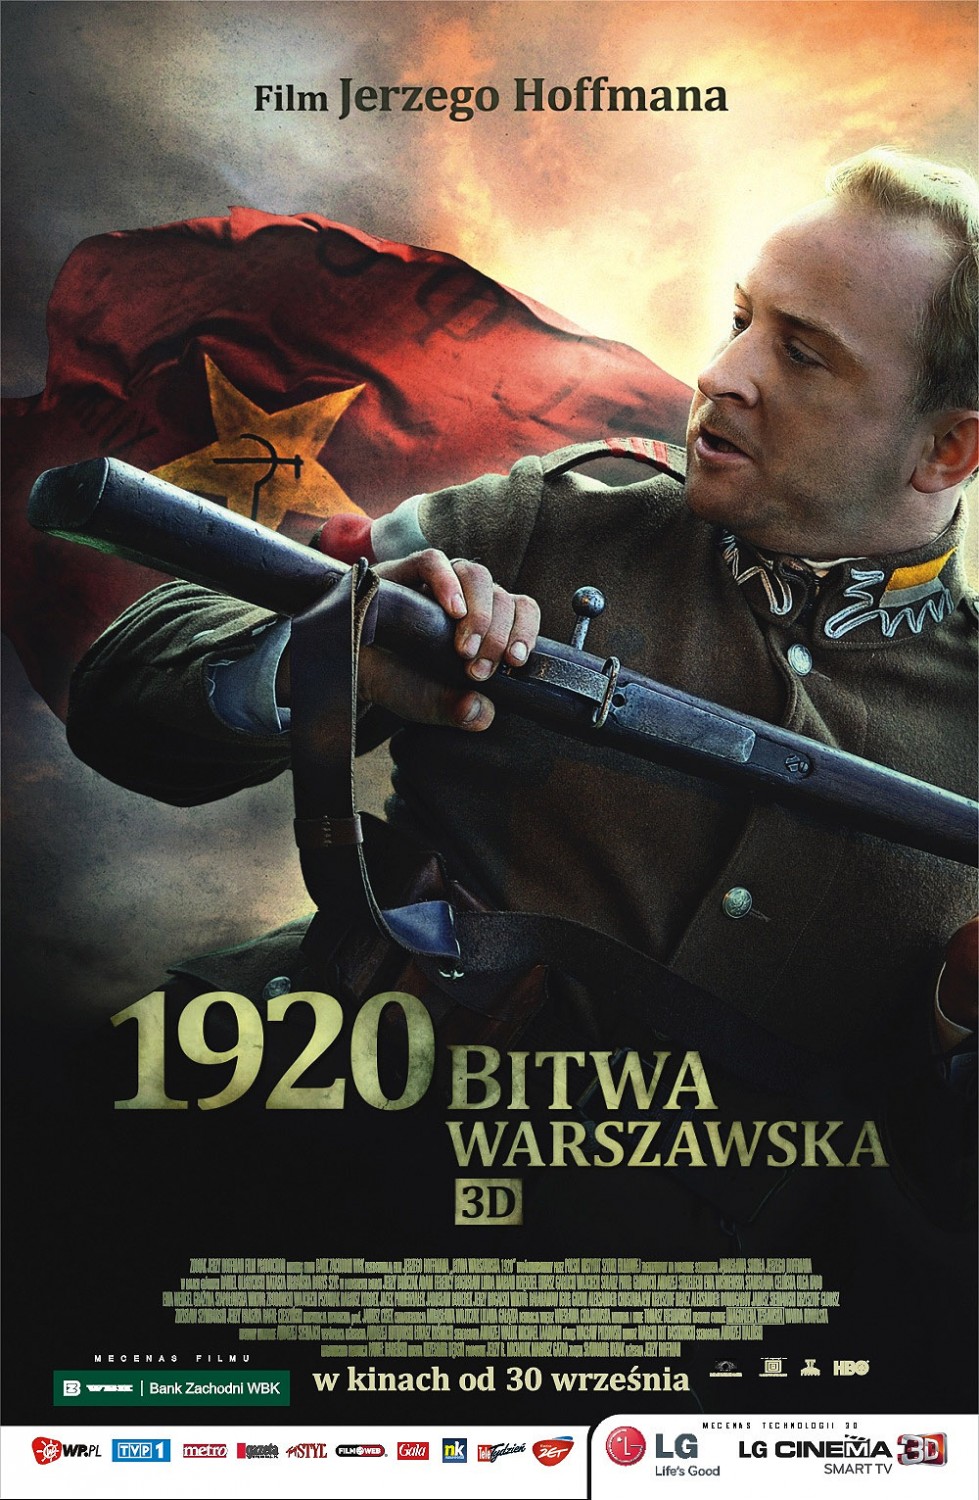 Extra Large Movie Poster Image for Bitwa warszawska 1920 (#2 of 7)